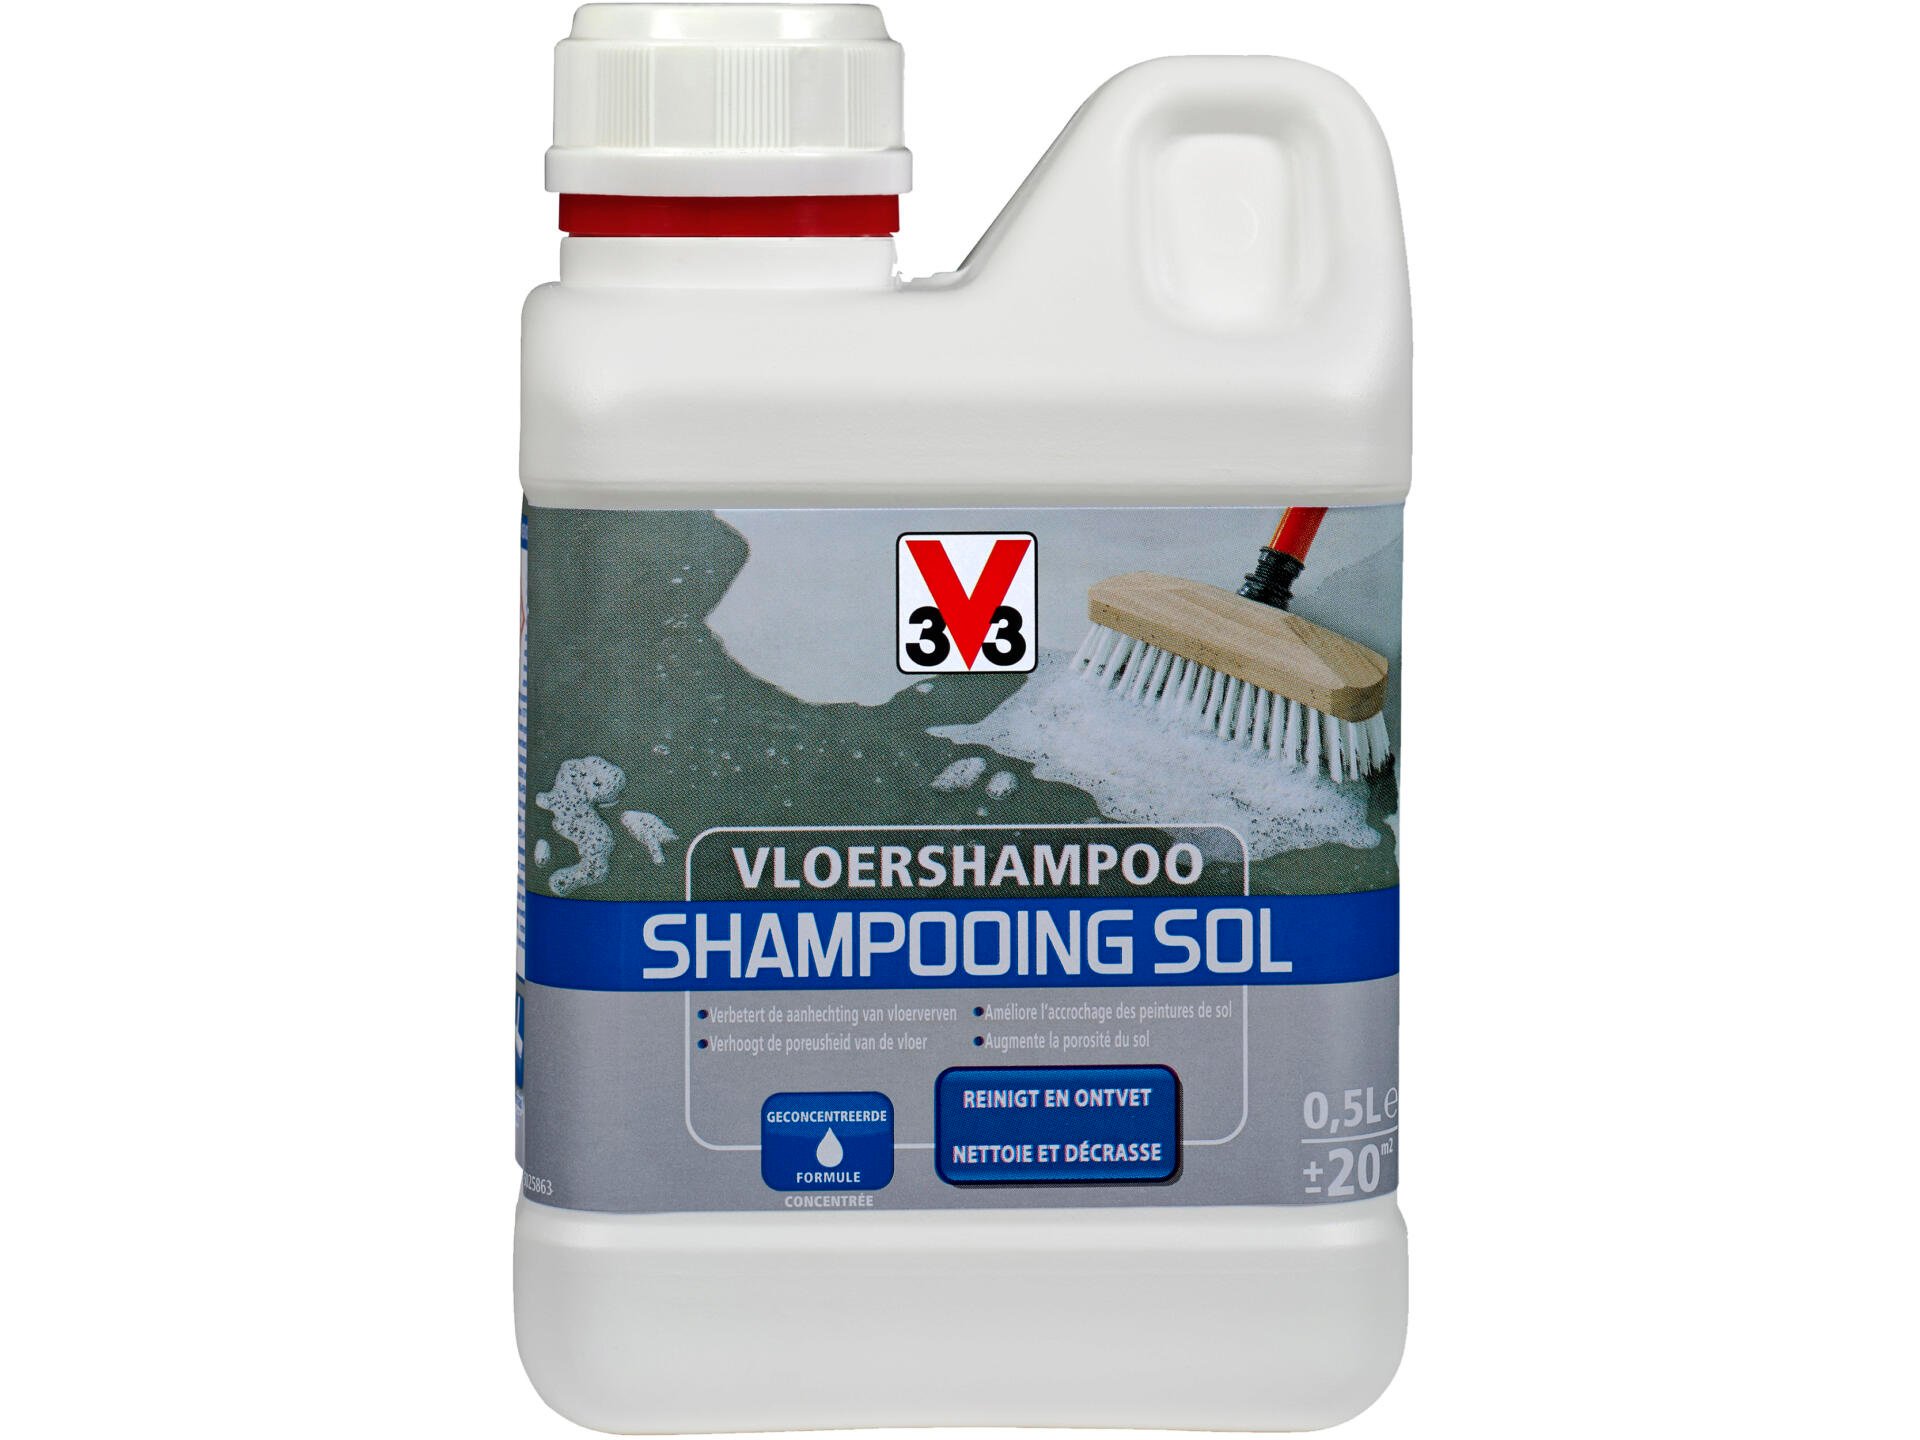 V33 shampooing sol 0,5l